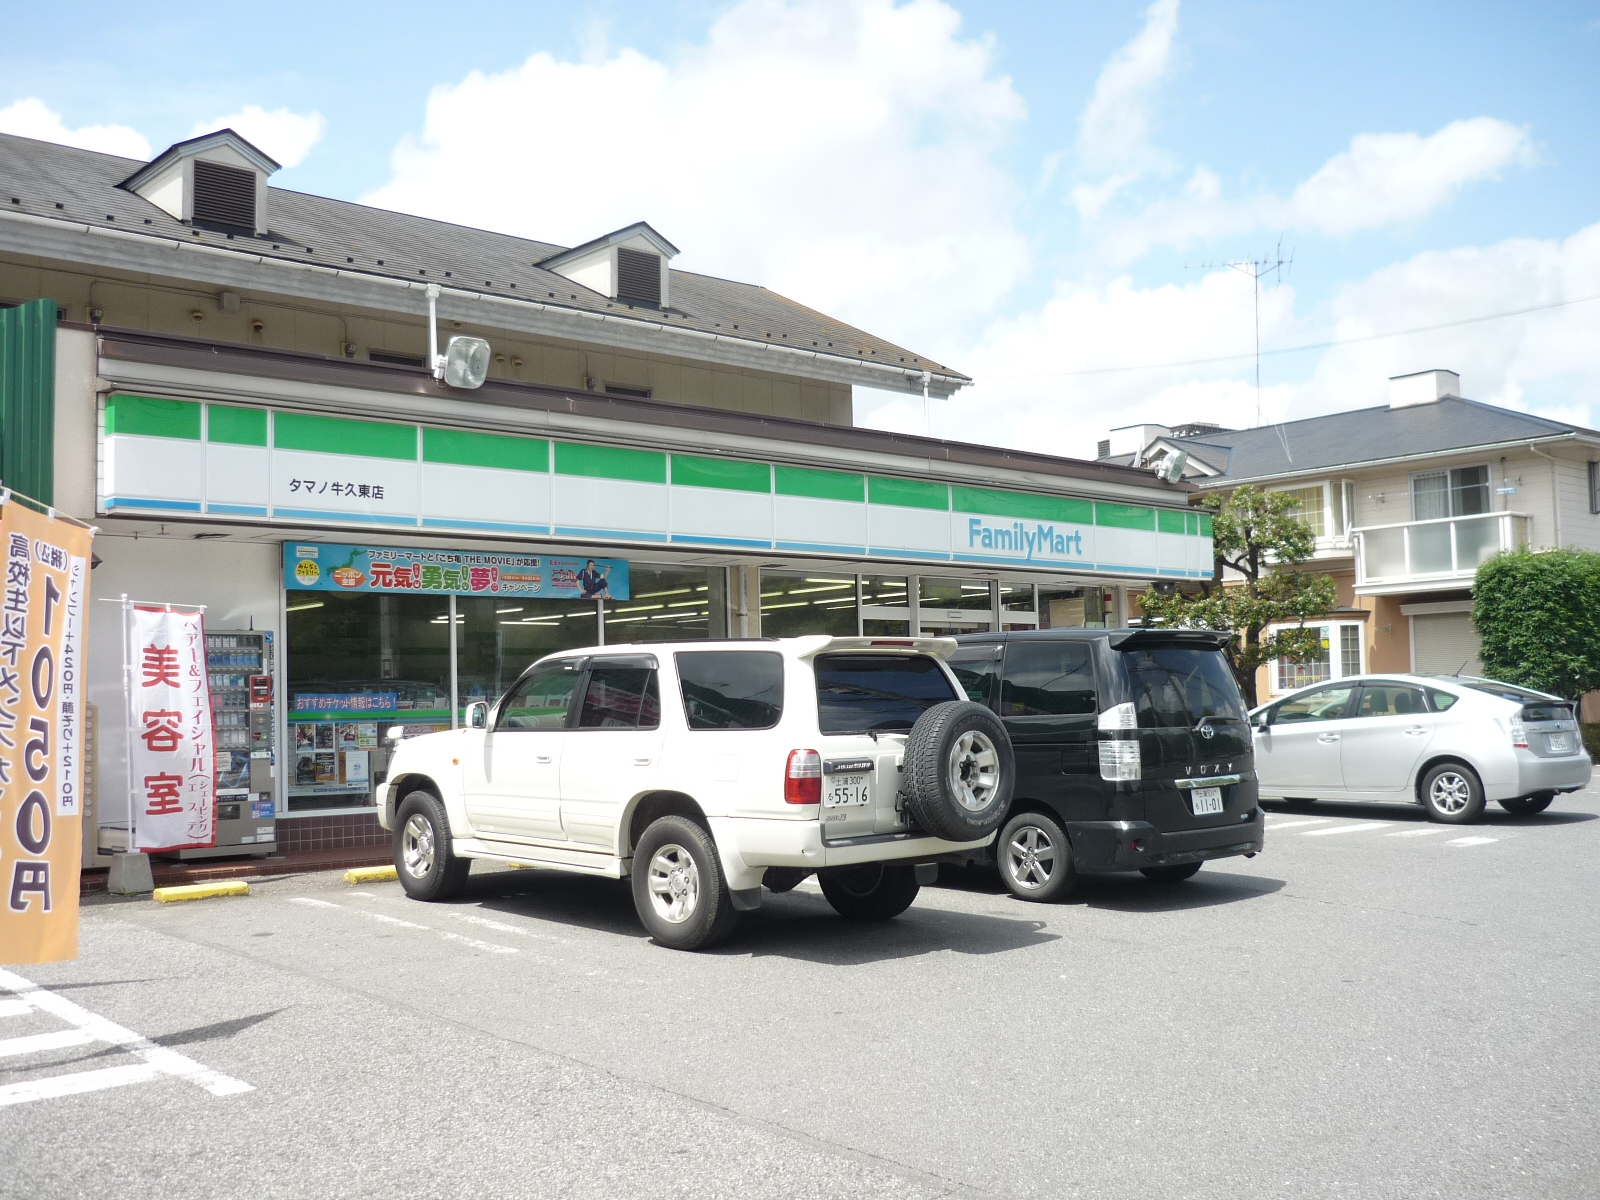 Convenience store. 125m to FamilyMart Tamano Ushiku Higashiten (convenience store)